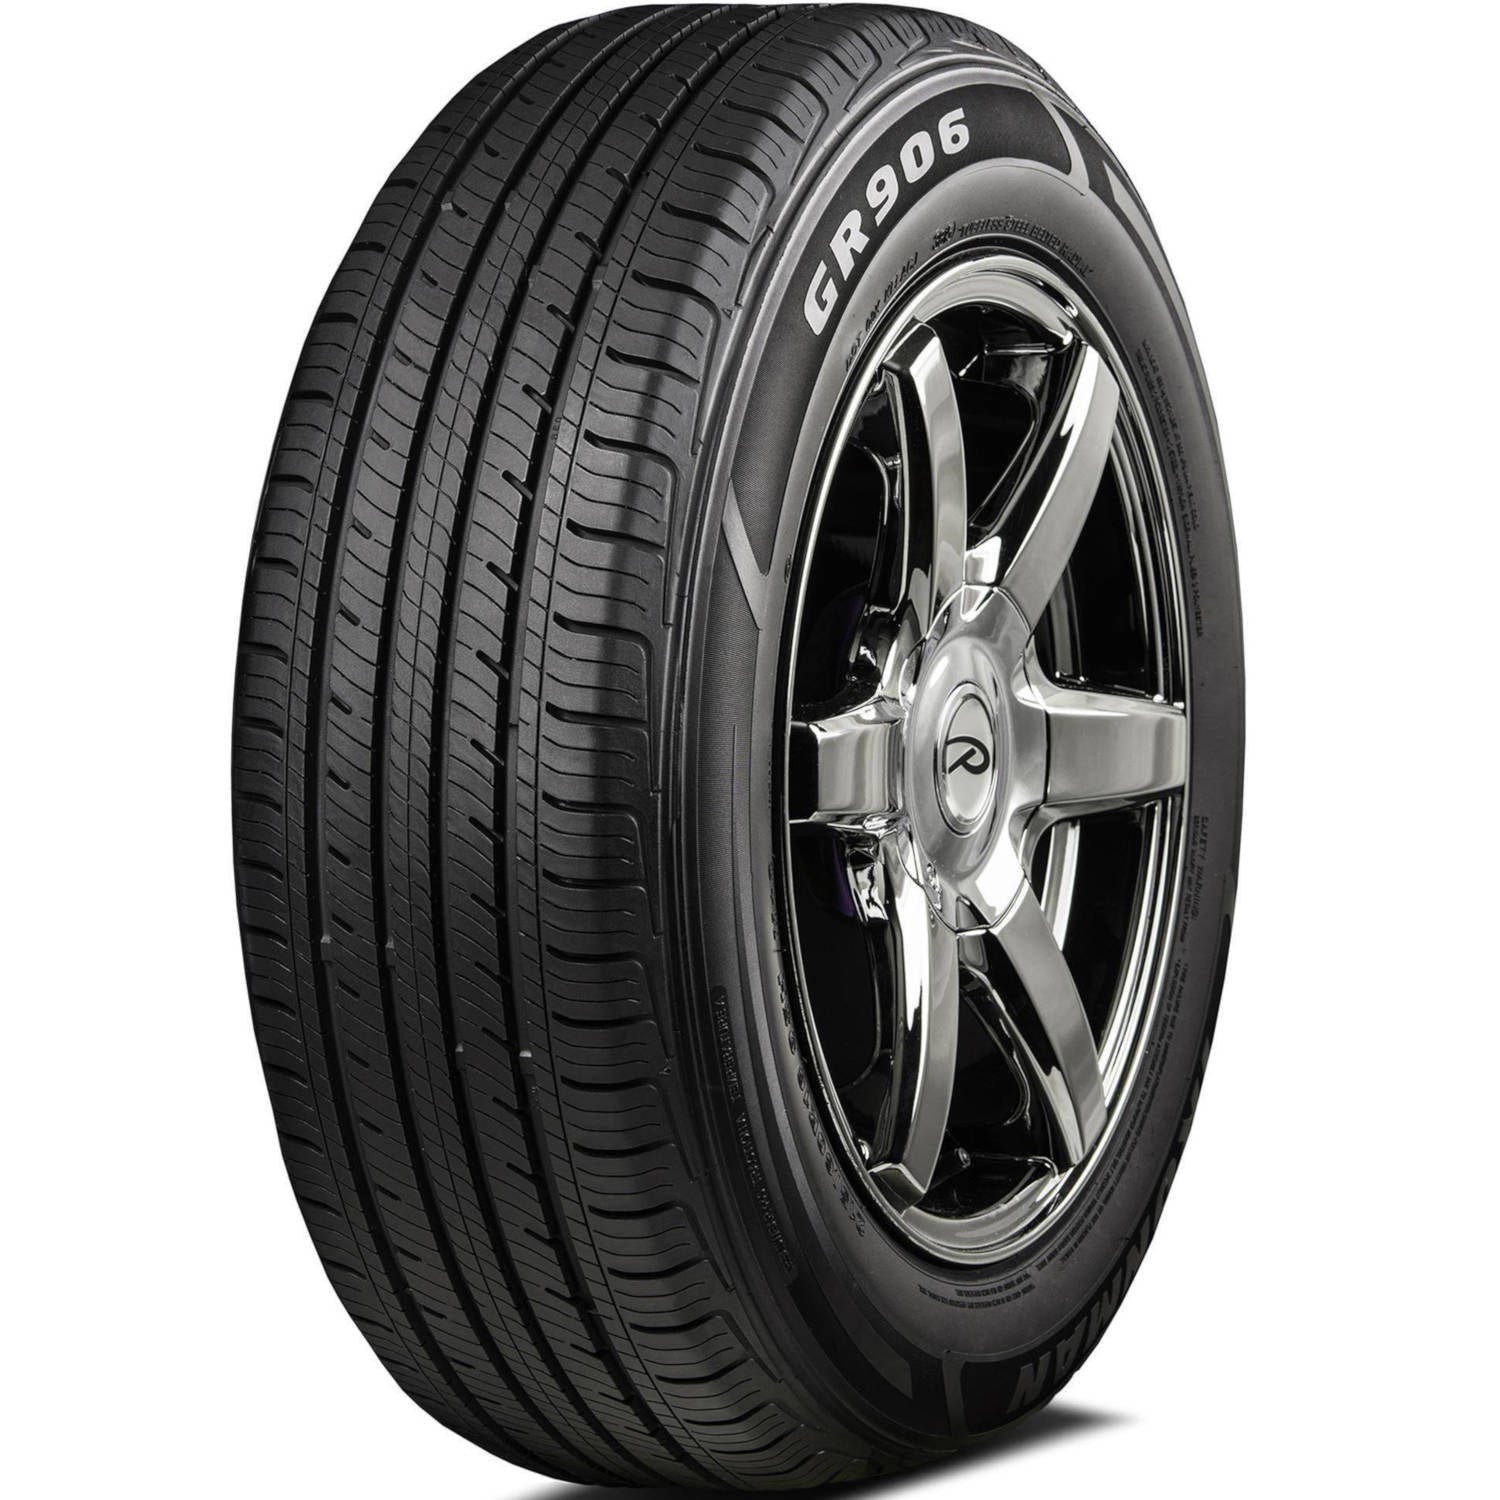 IRONMAN GR906 235/55R17 (27.2X9.3R 17) Tires